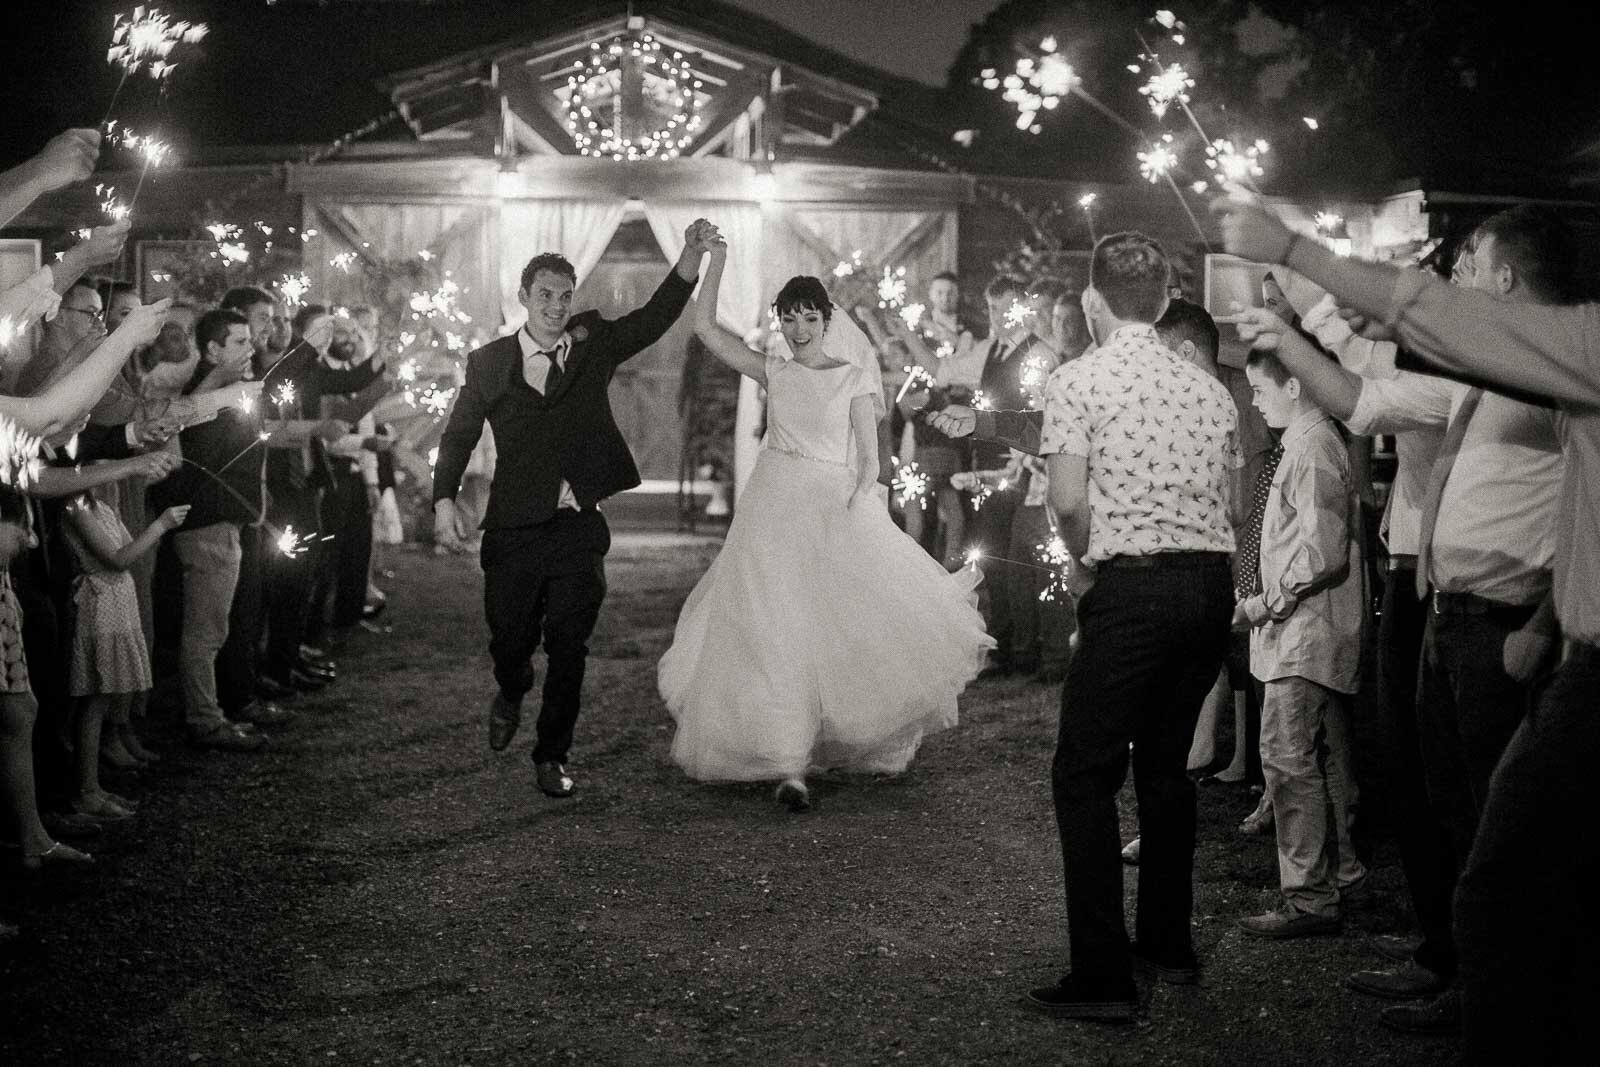 charlottesville-virginia-luray-wedding-photographer-romatic-film-fuji400h-35mm-film-2-37.jpg